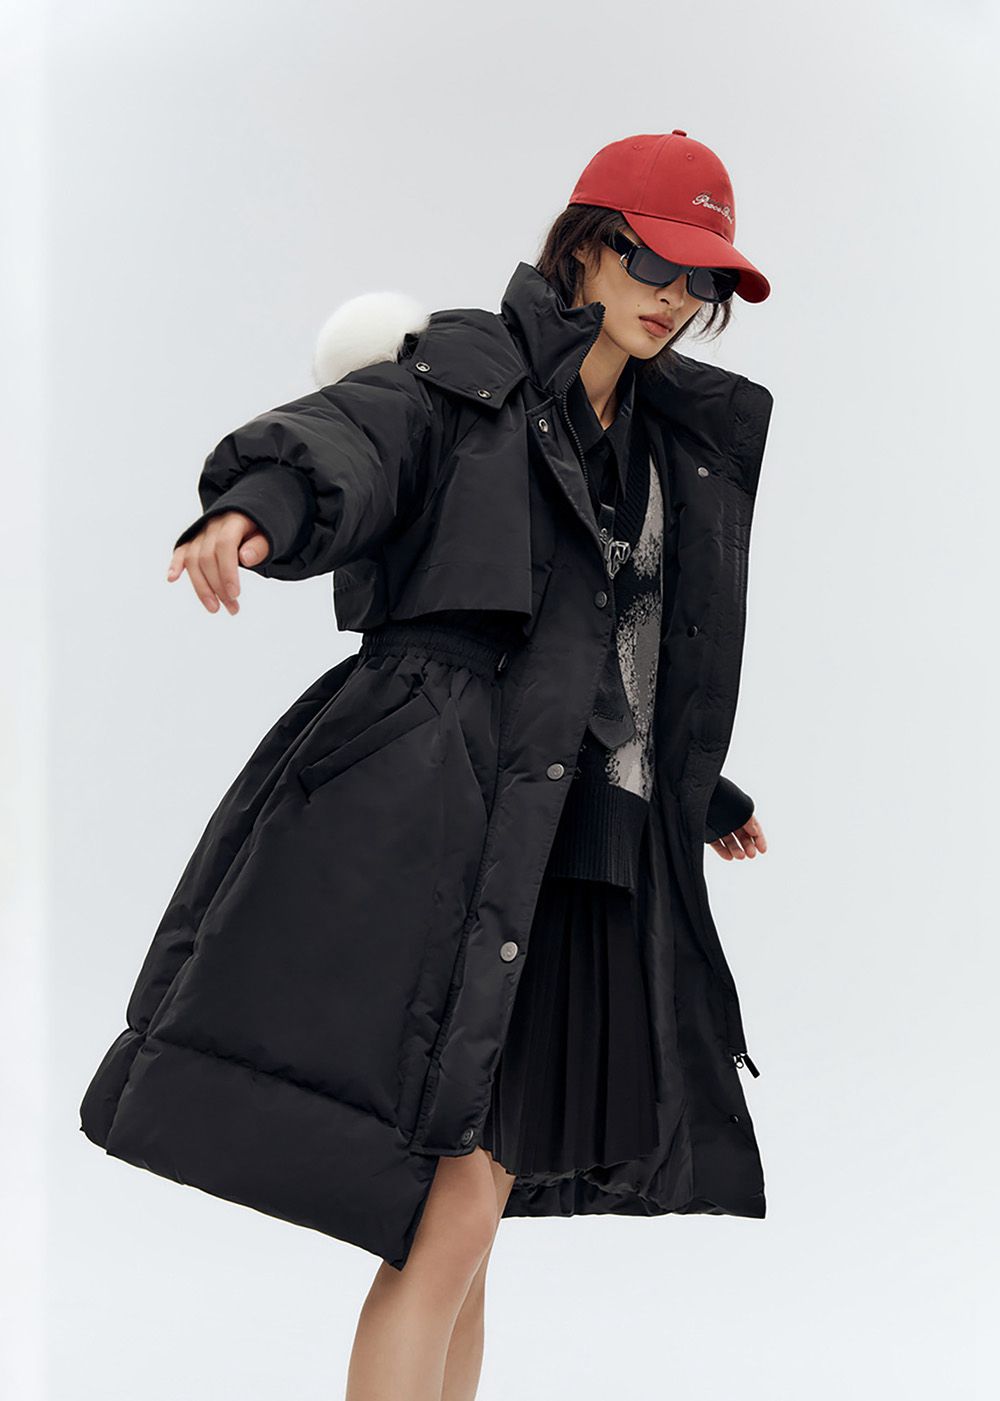 black down coat